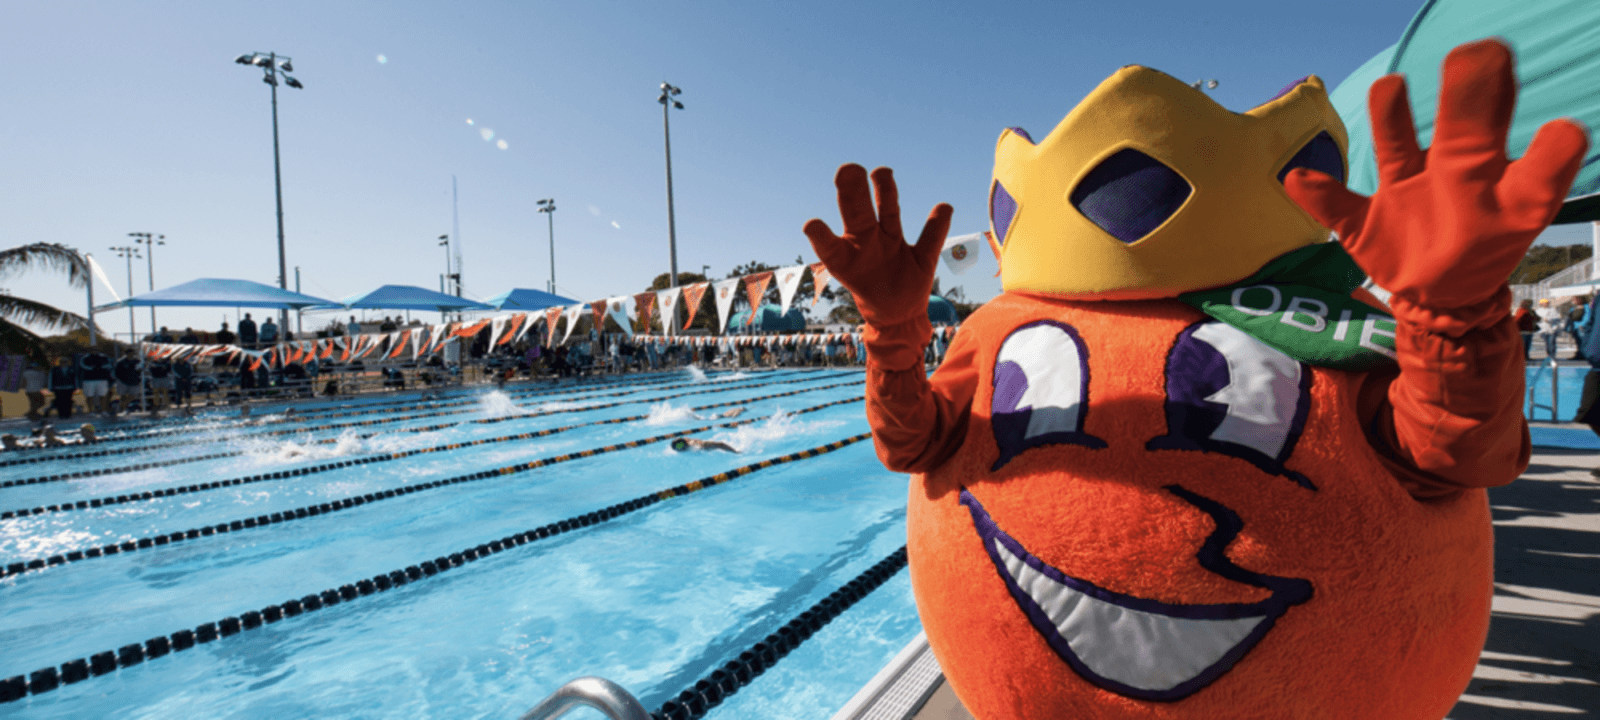 Orange Bowl Swim Classic Persevering in Wake of Hurricane Irma